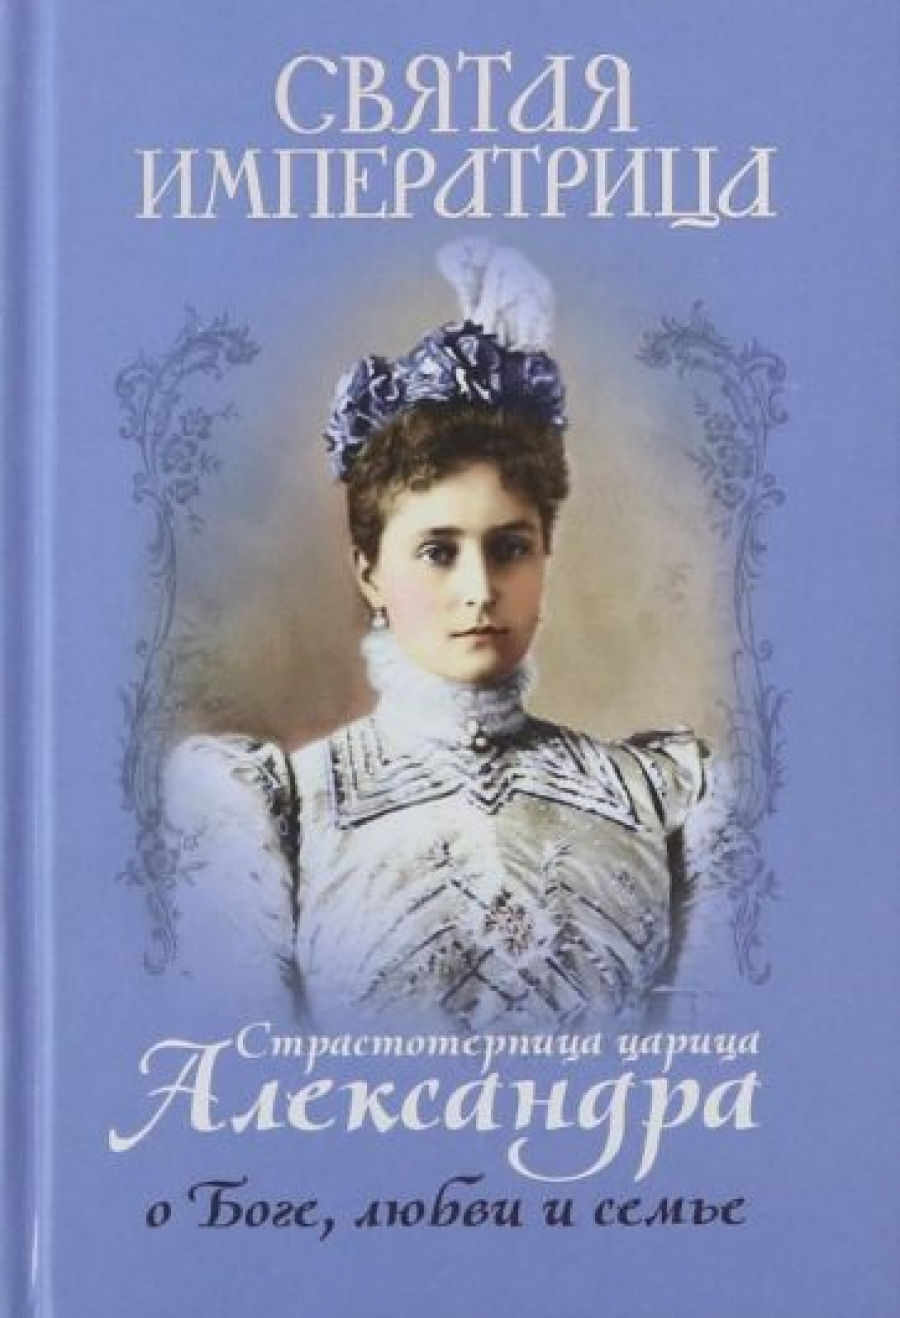 Святая Императрица: страстотерпица царица Александра о Боге, любви и семье 